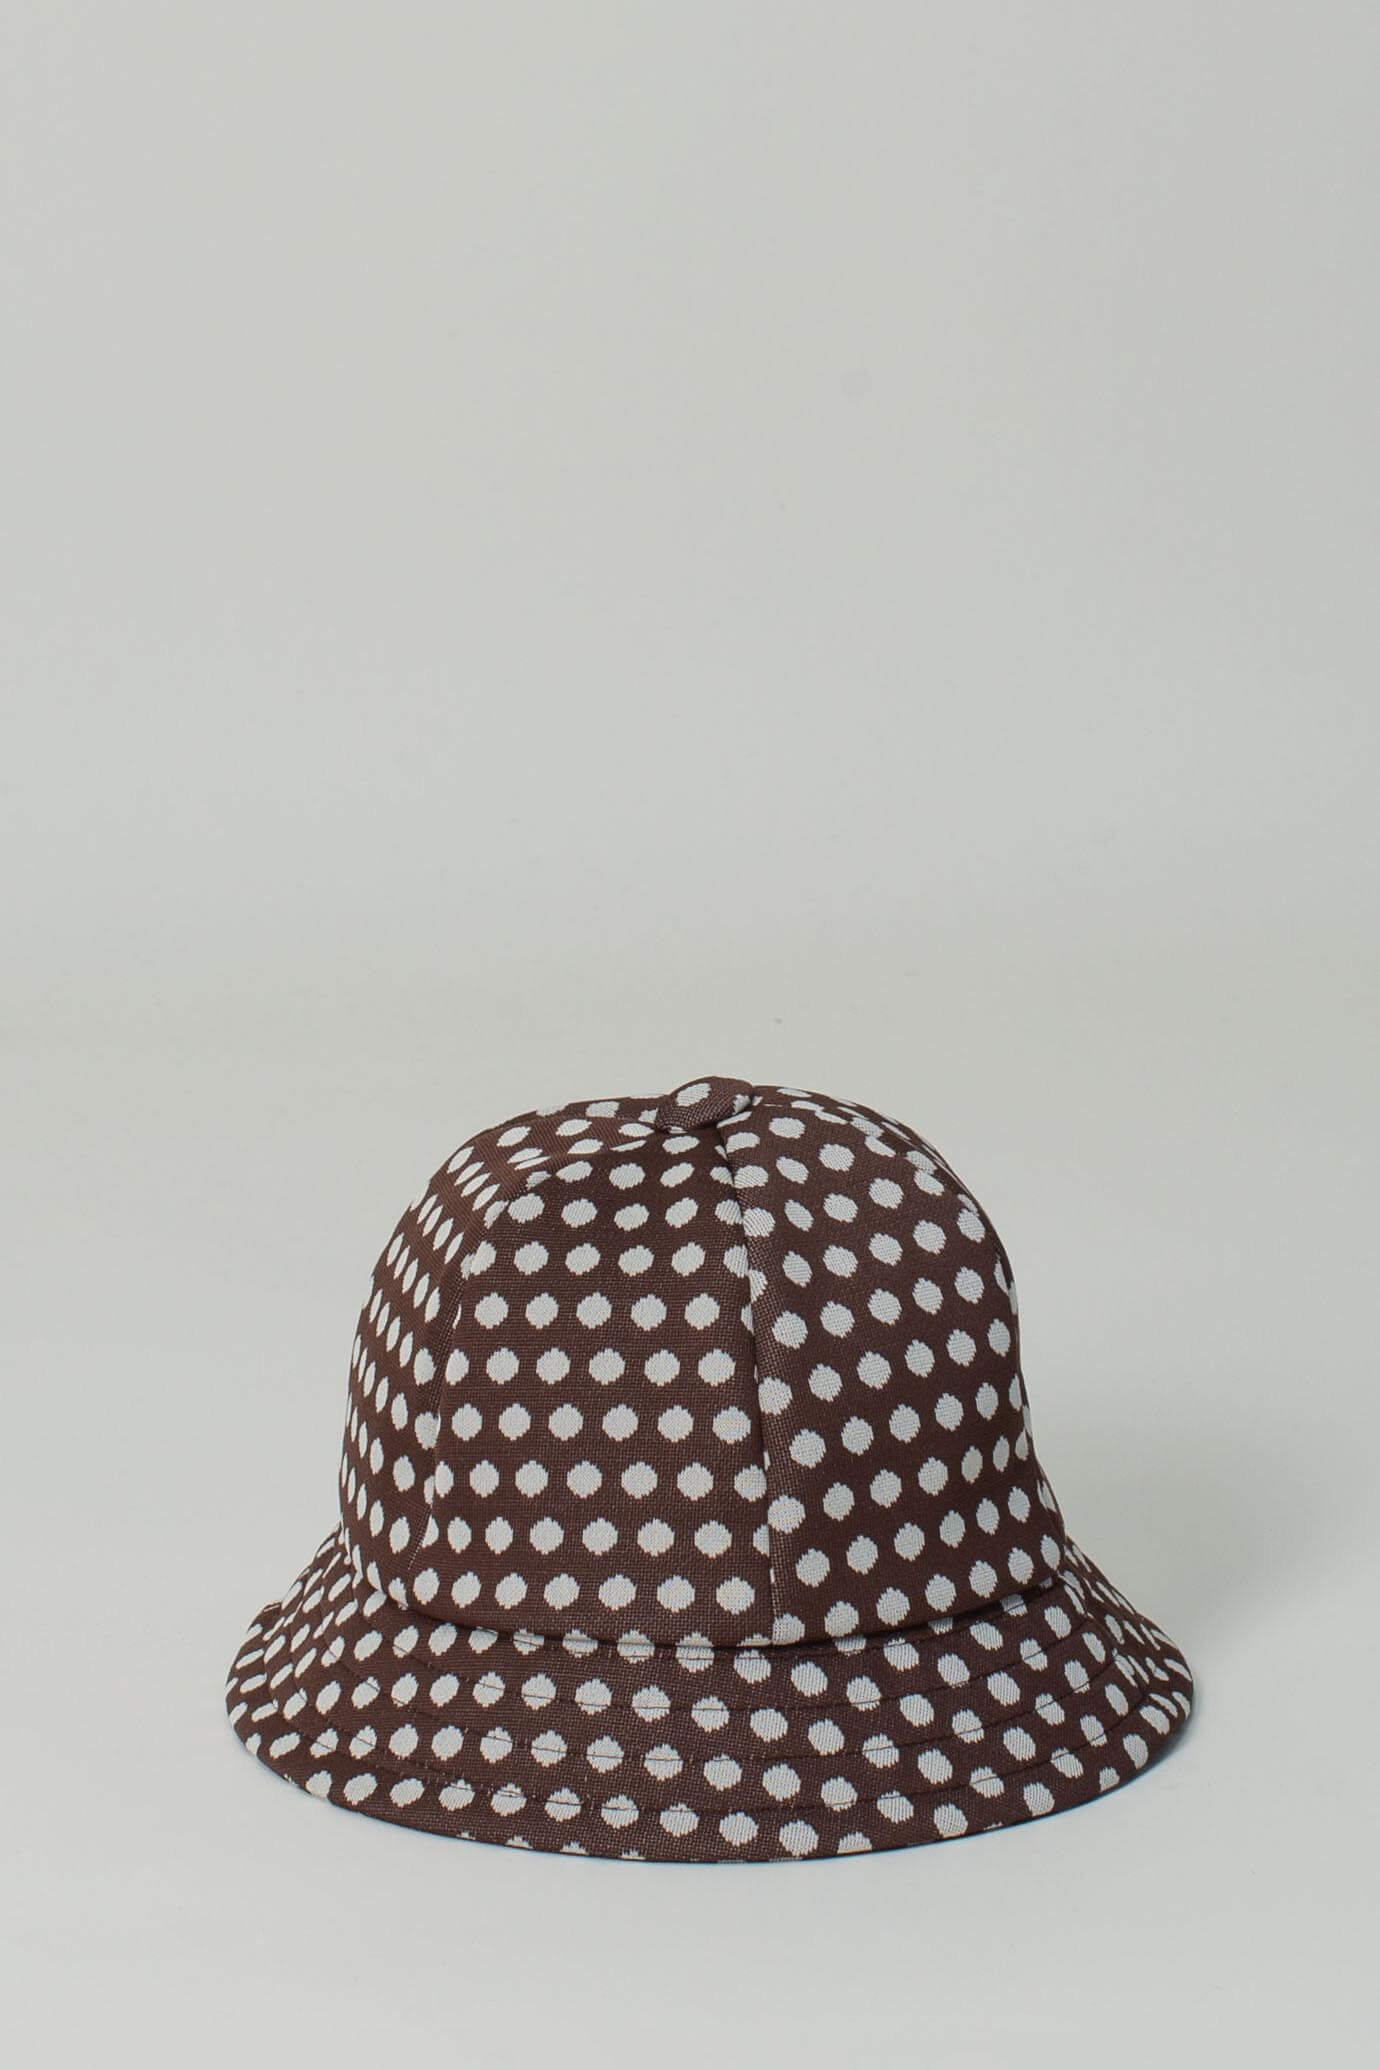 Bermuda Hat - Poly Jq. A-Polka Dot